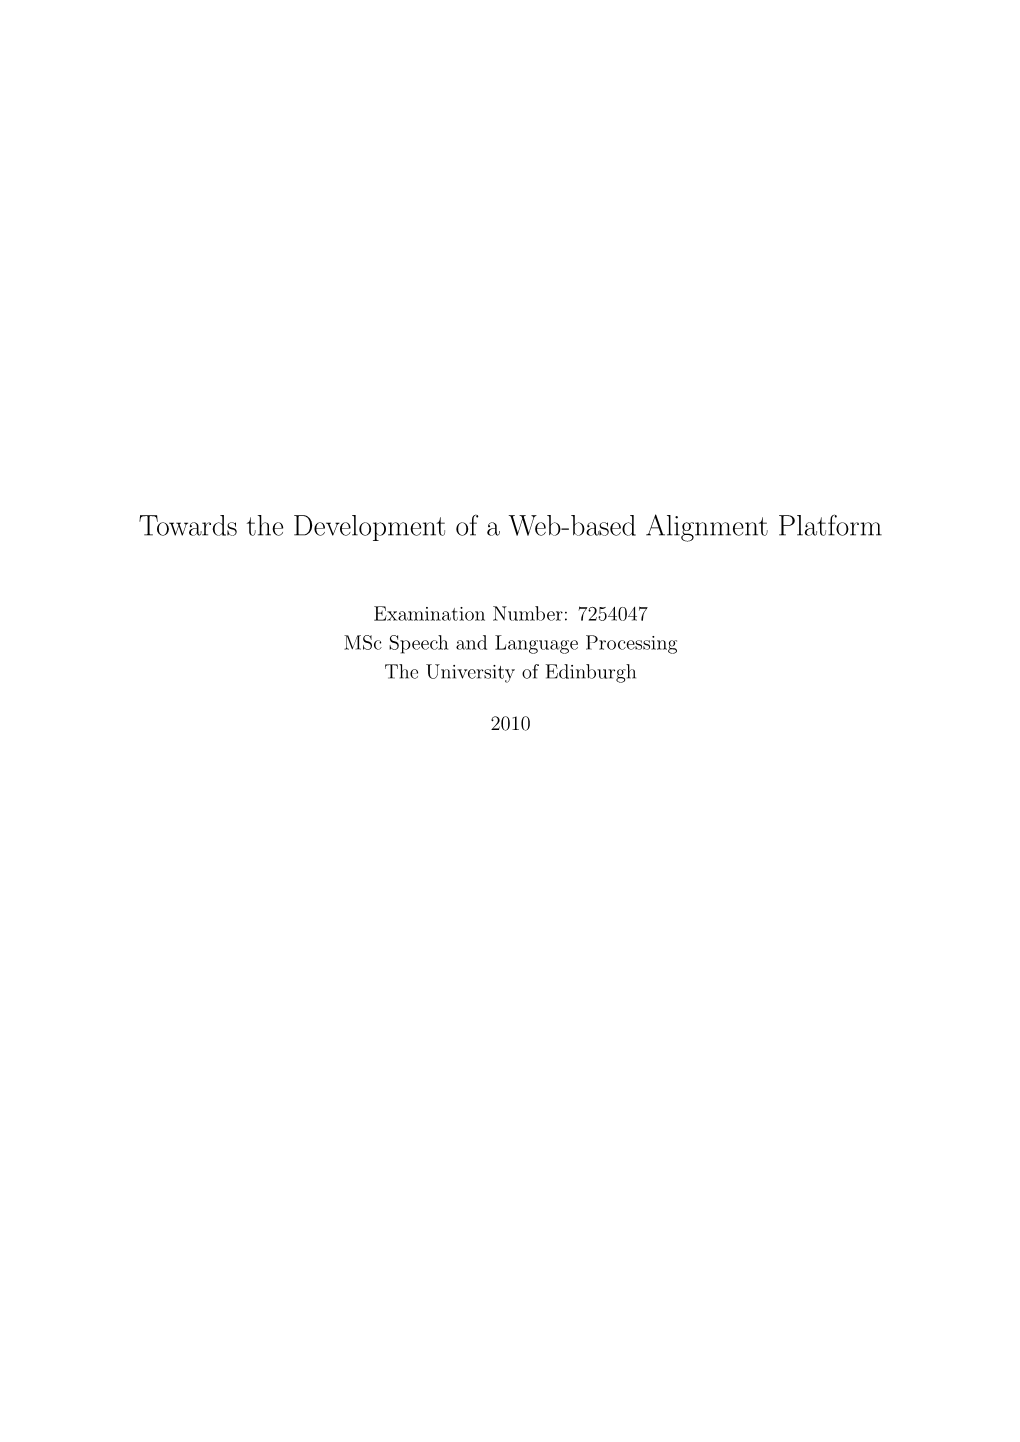 Towards the Development of a Web-Based Alignment Platform